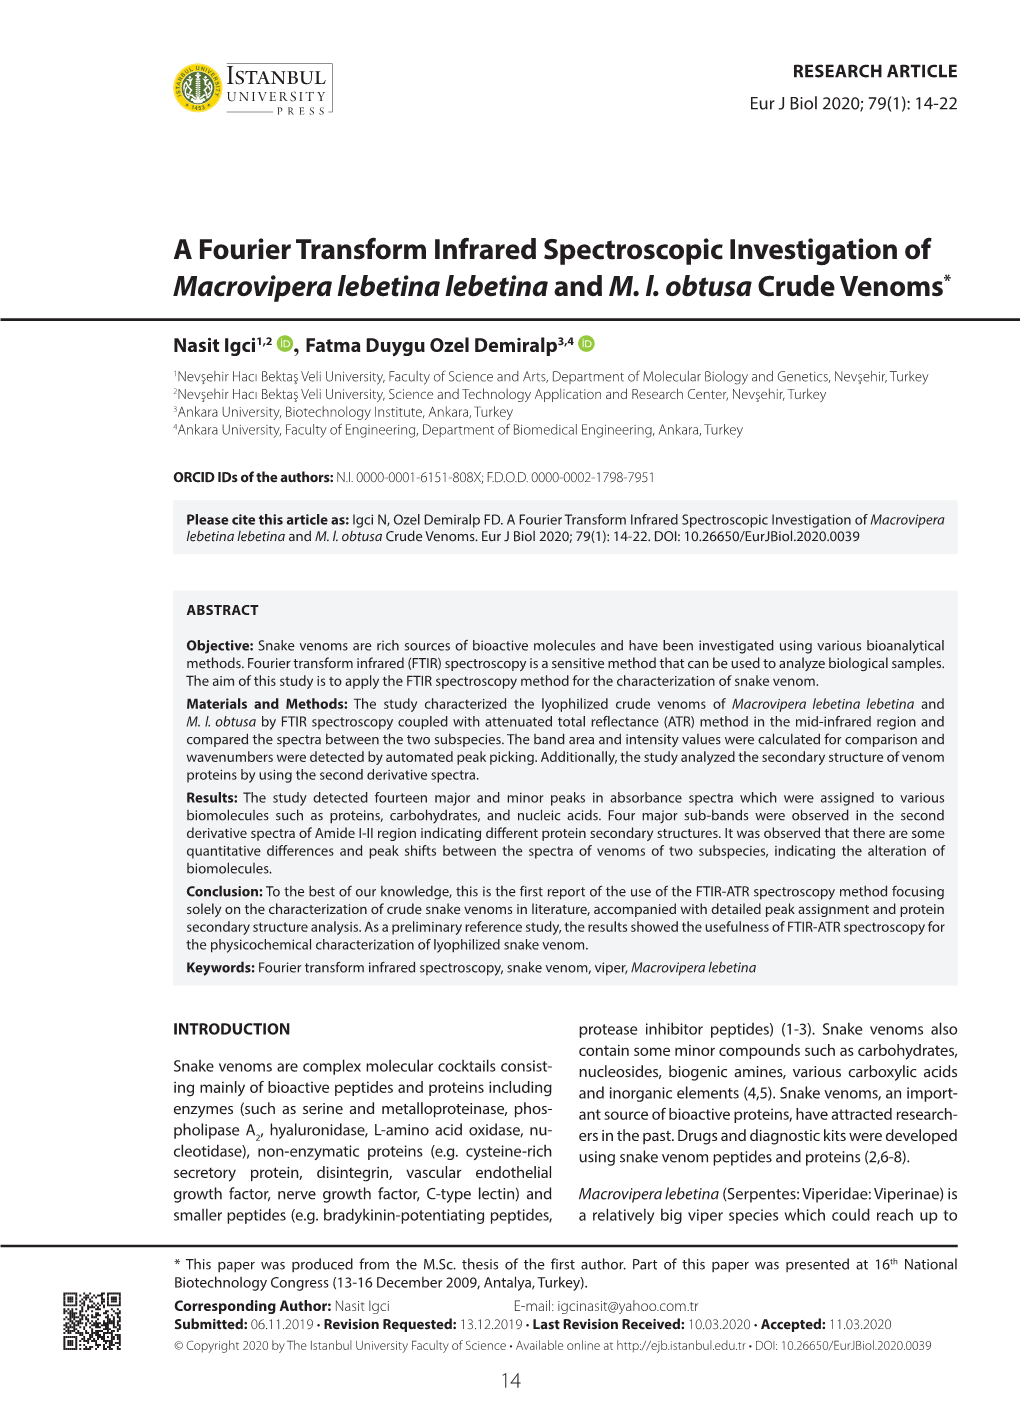 A Fourier Transform Infrared Spectroscopic Investigation of Macrovipera Lebetina Lebetina and M